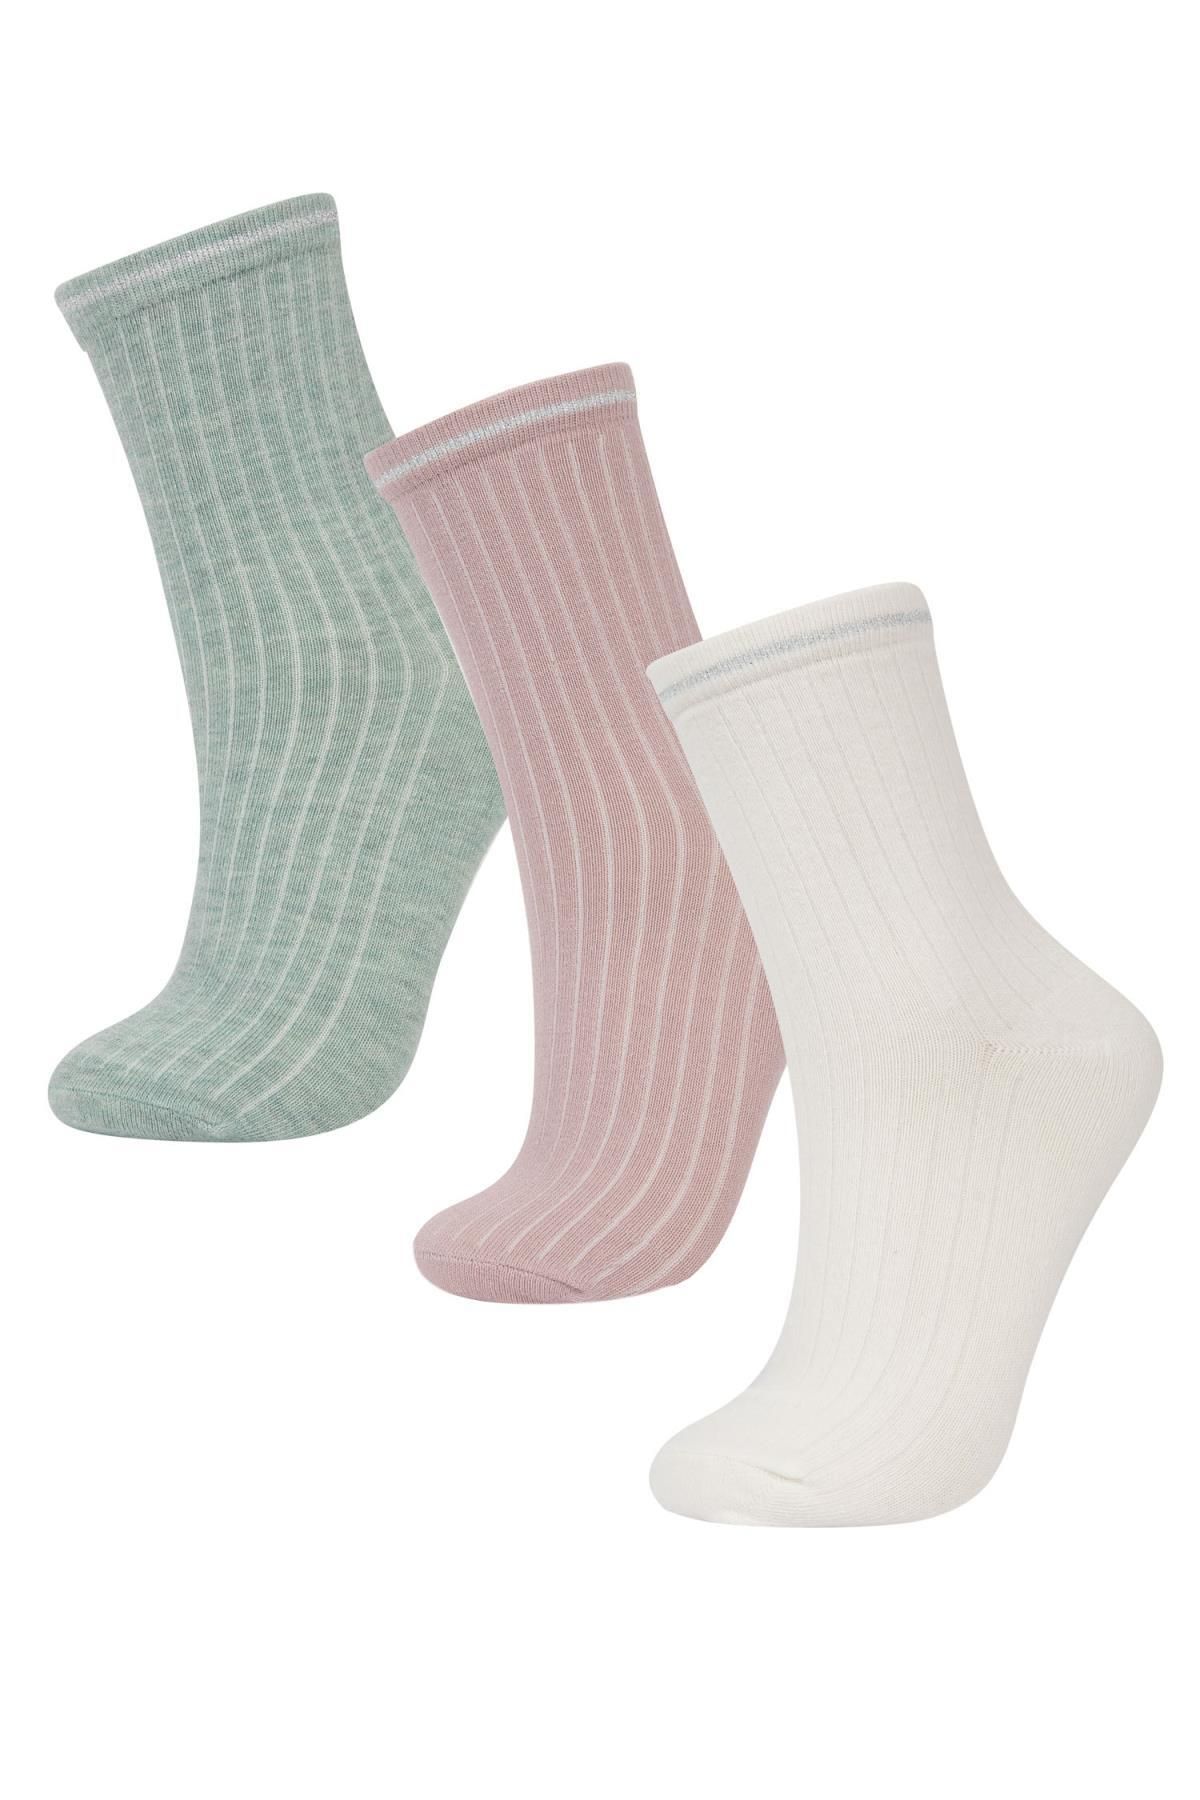 Defacto Kadın 3lü Pamuklu Uzun Çorap B6100axns